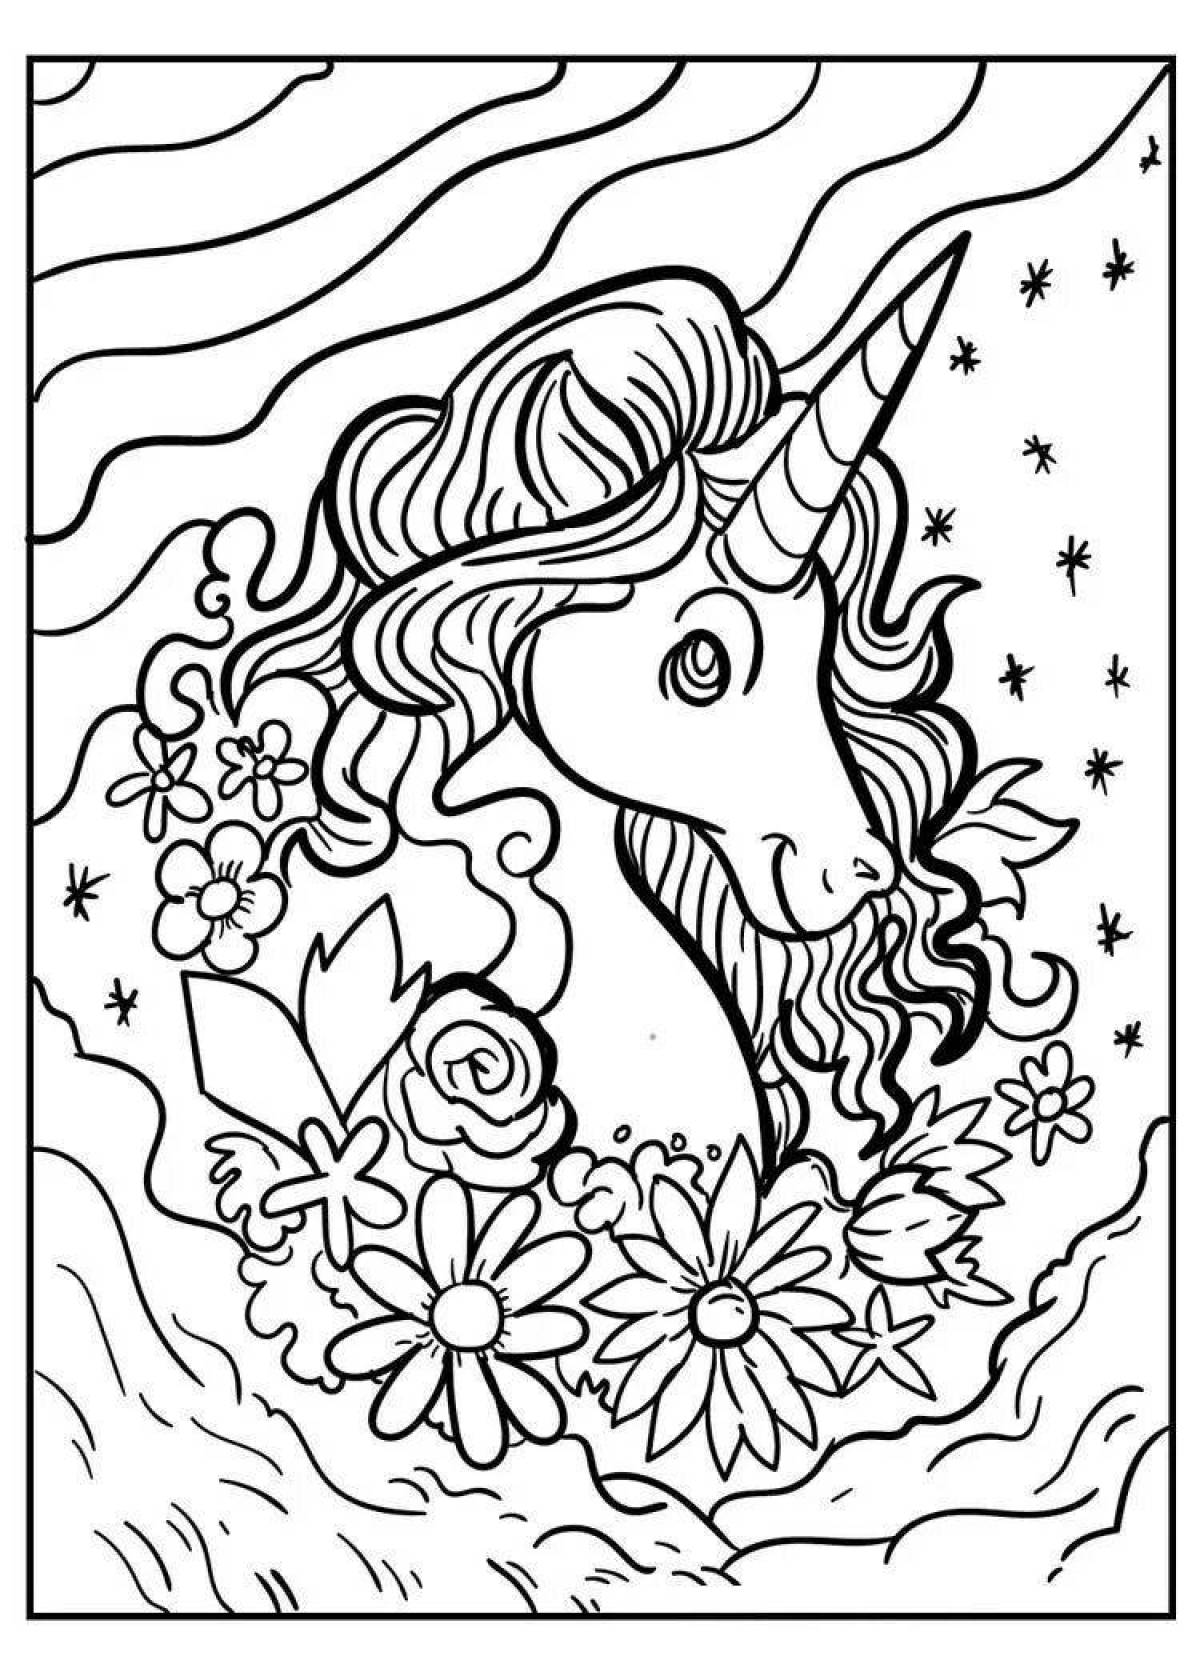 Tempting unicorn man coloring book